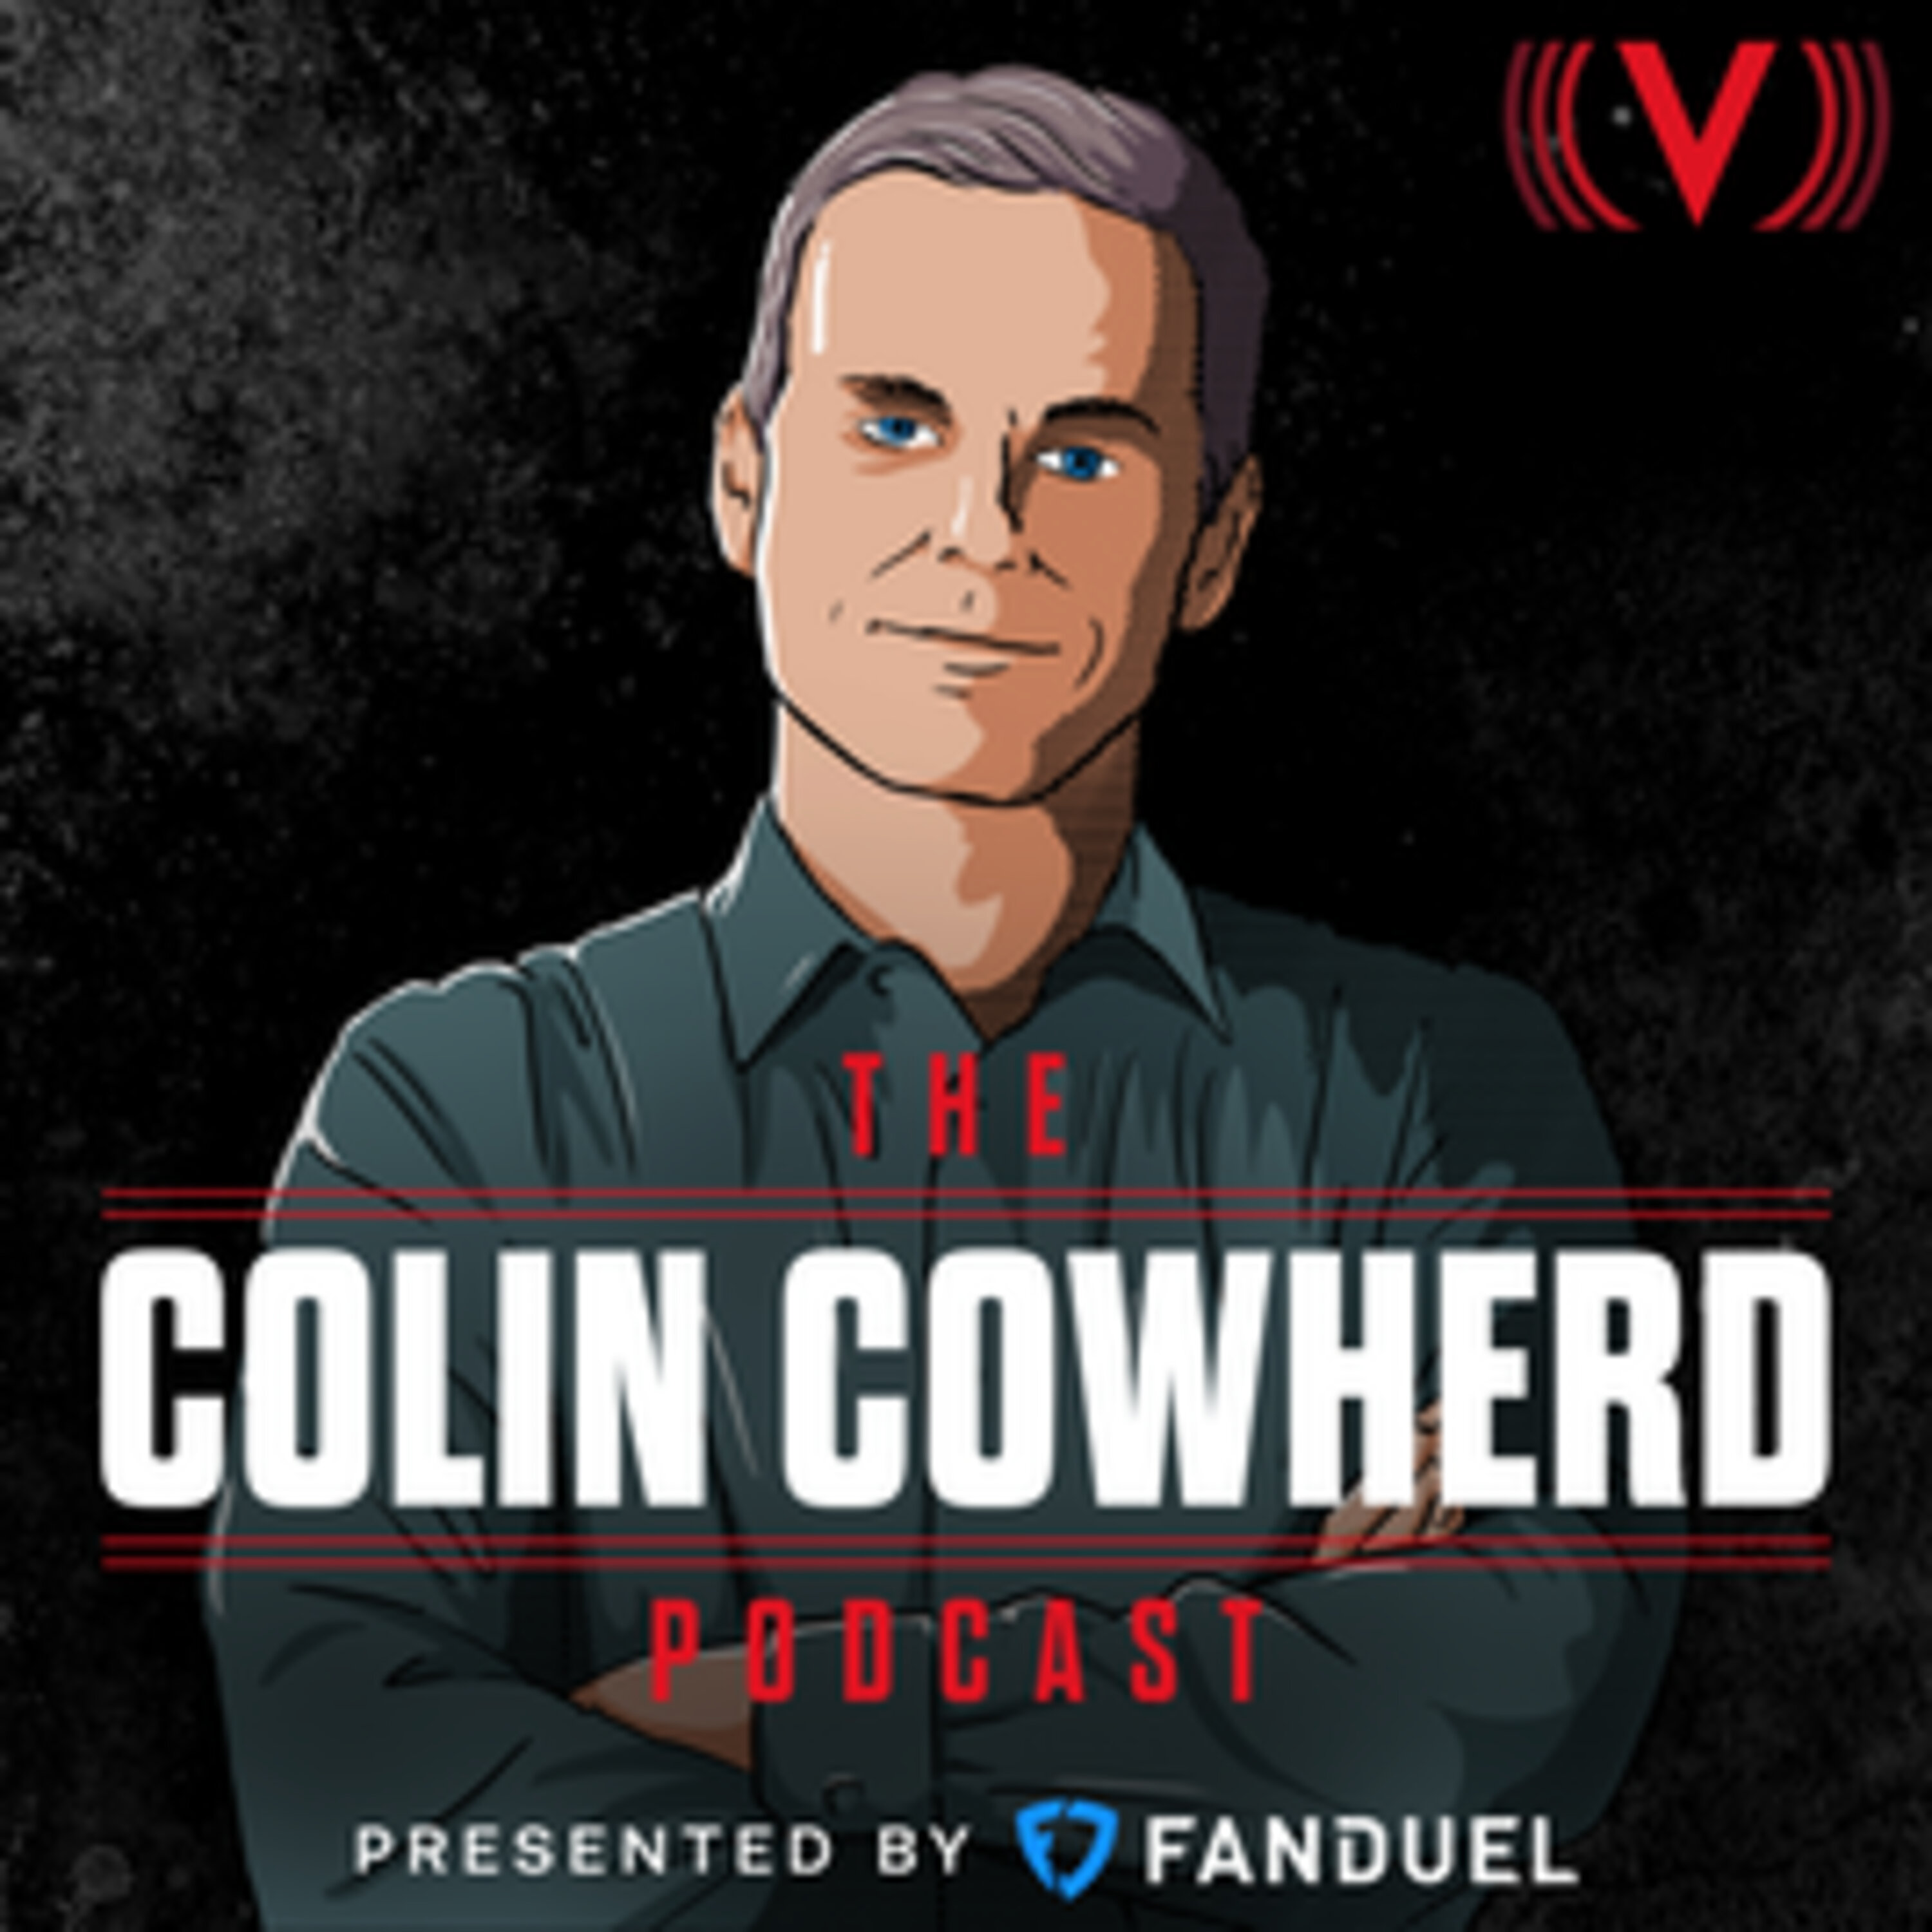 Colin Cowherd Podcast - Teflon MJ + Jay Bilas on Blue Blood Upsets, Coach K Relationship, NIL Regulation